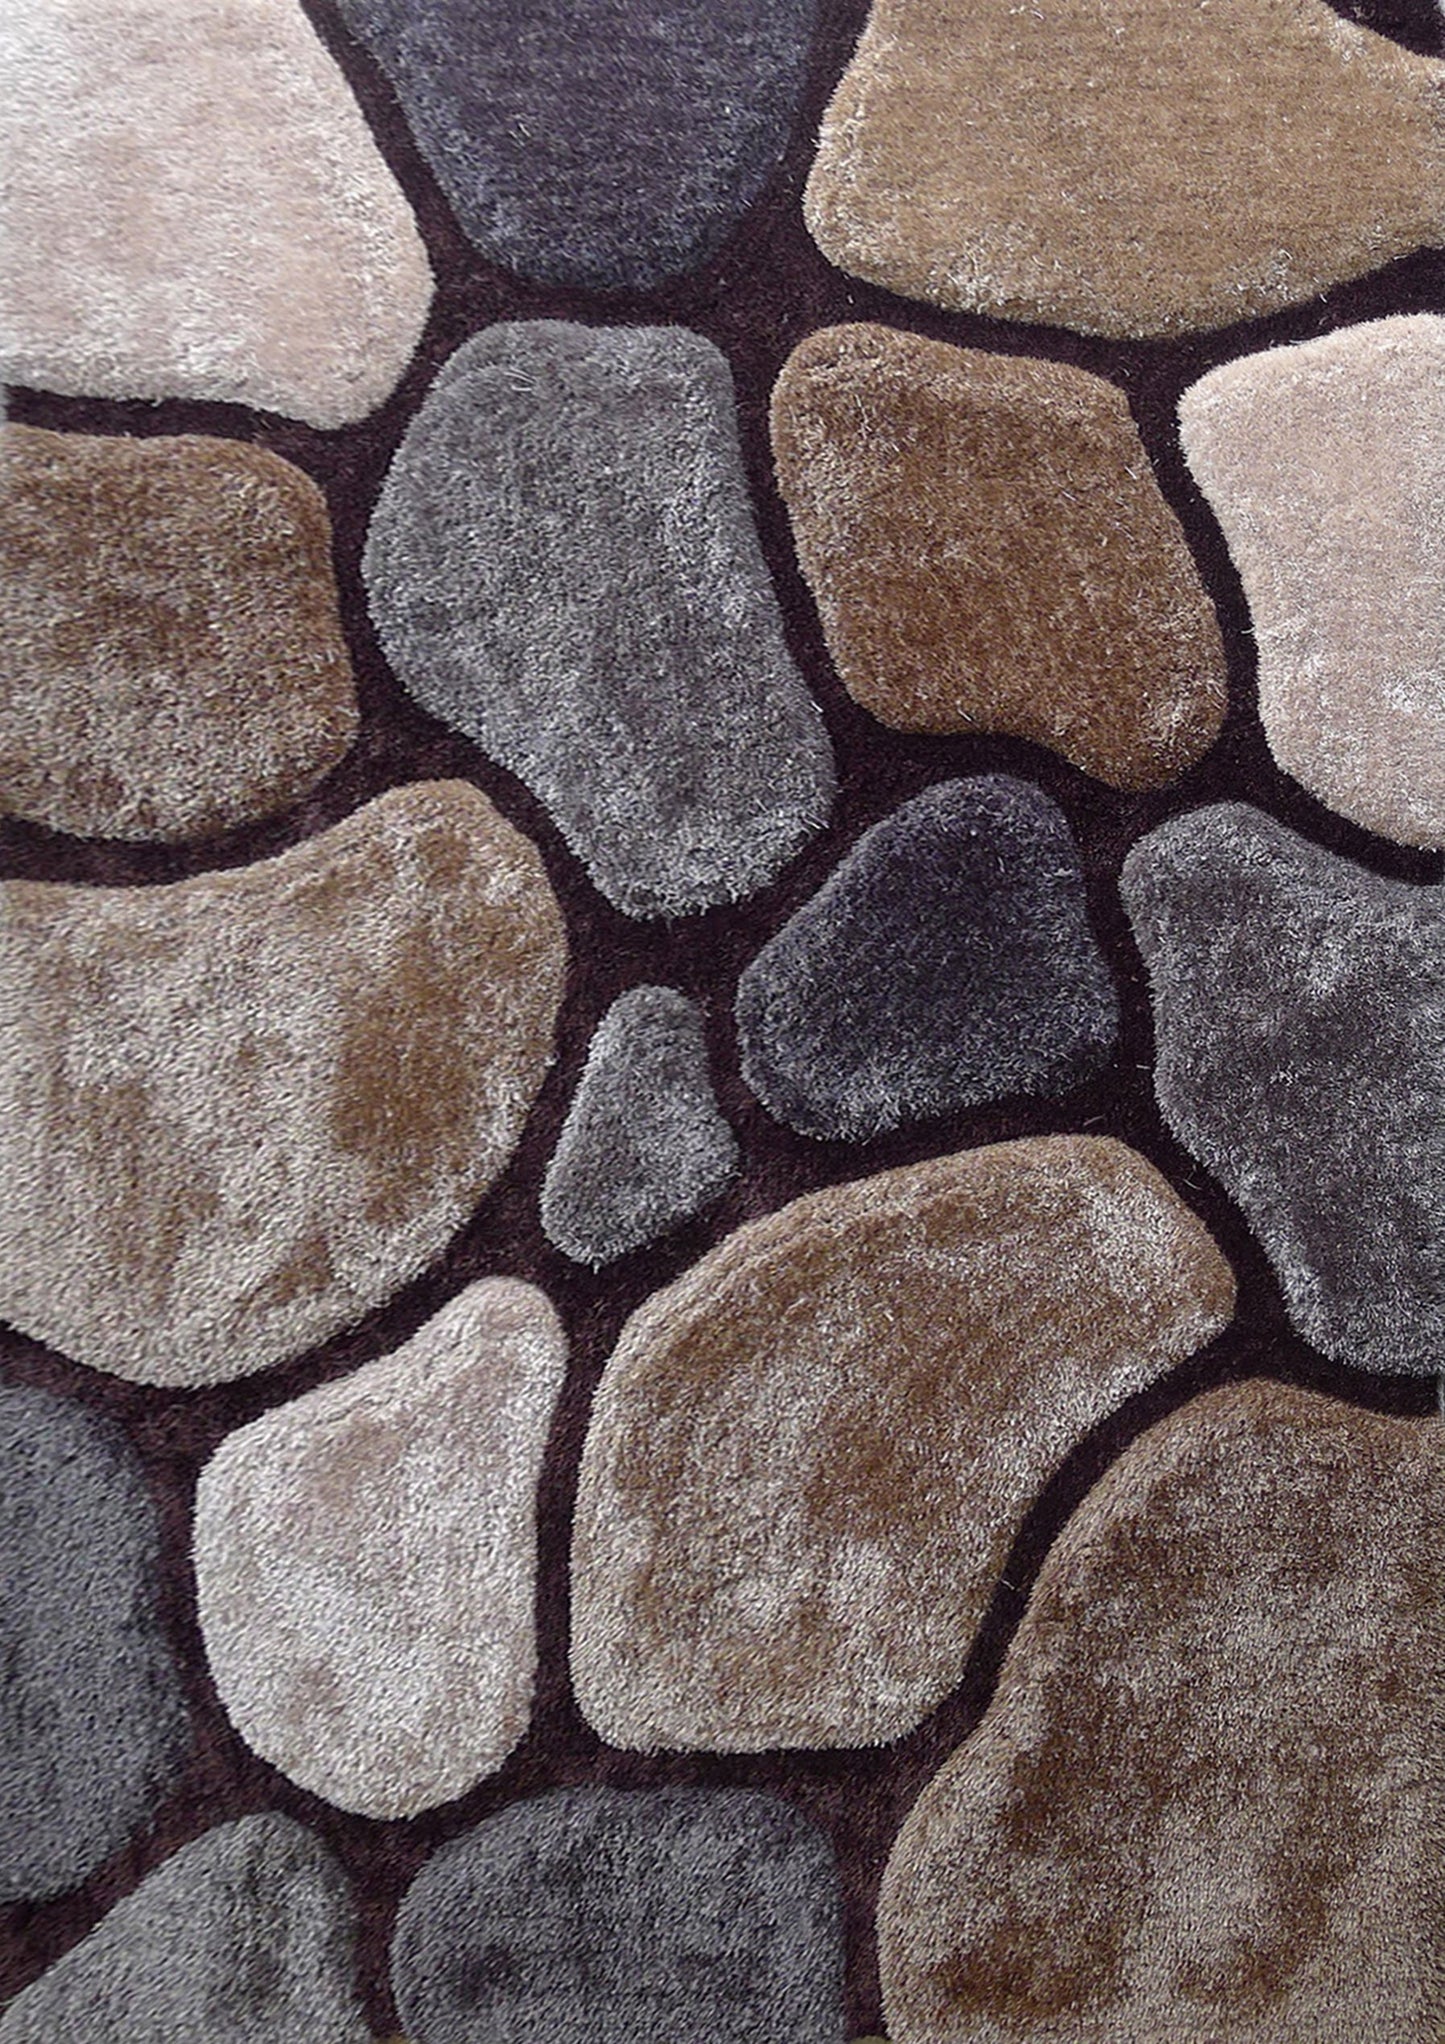 Soft Cozy Rock 3D Design Shag Area Rug/Carpet Gray Brown